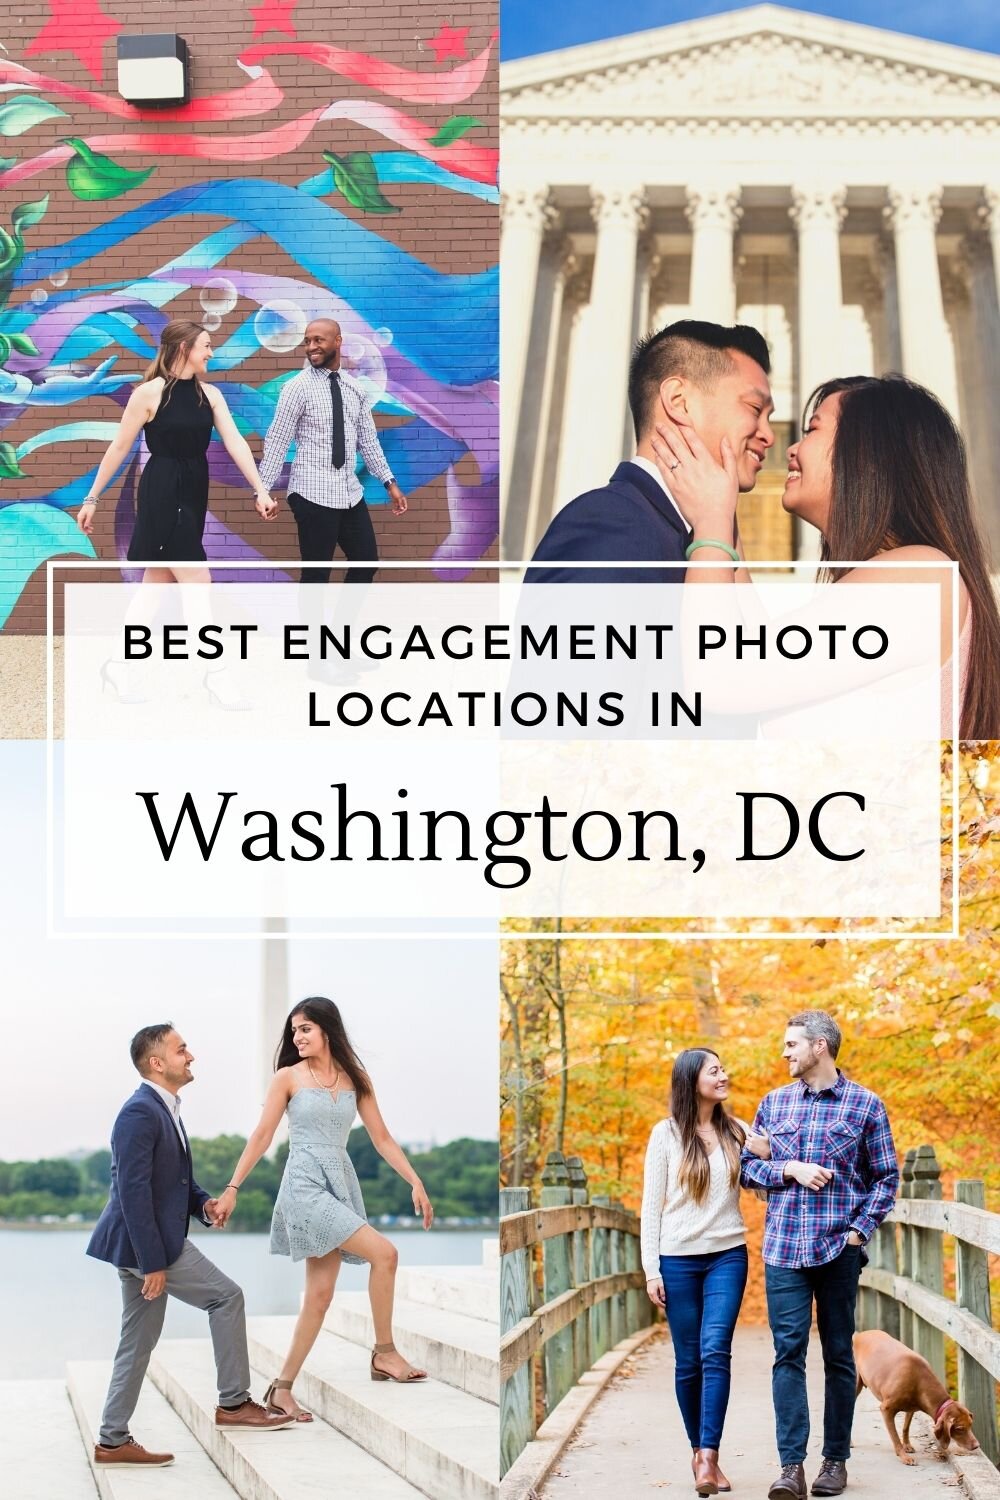 4 images best - dc engagements.jpg